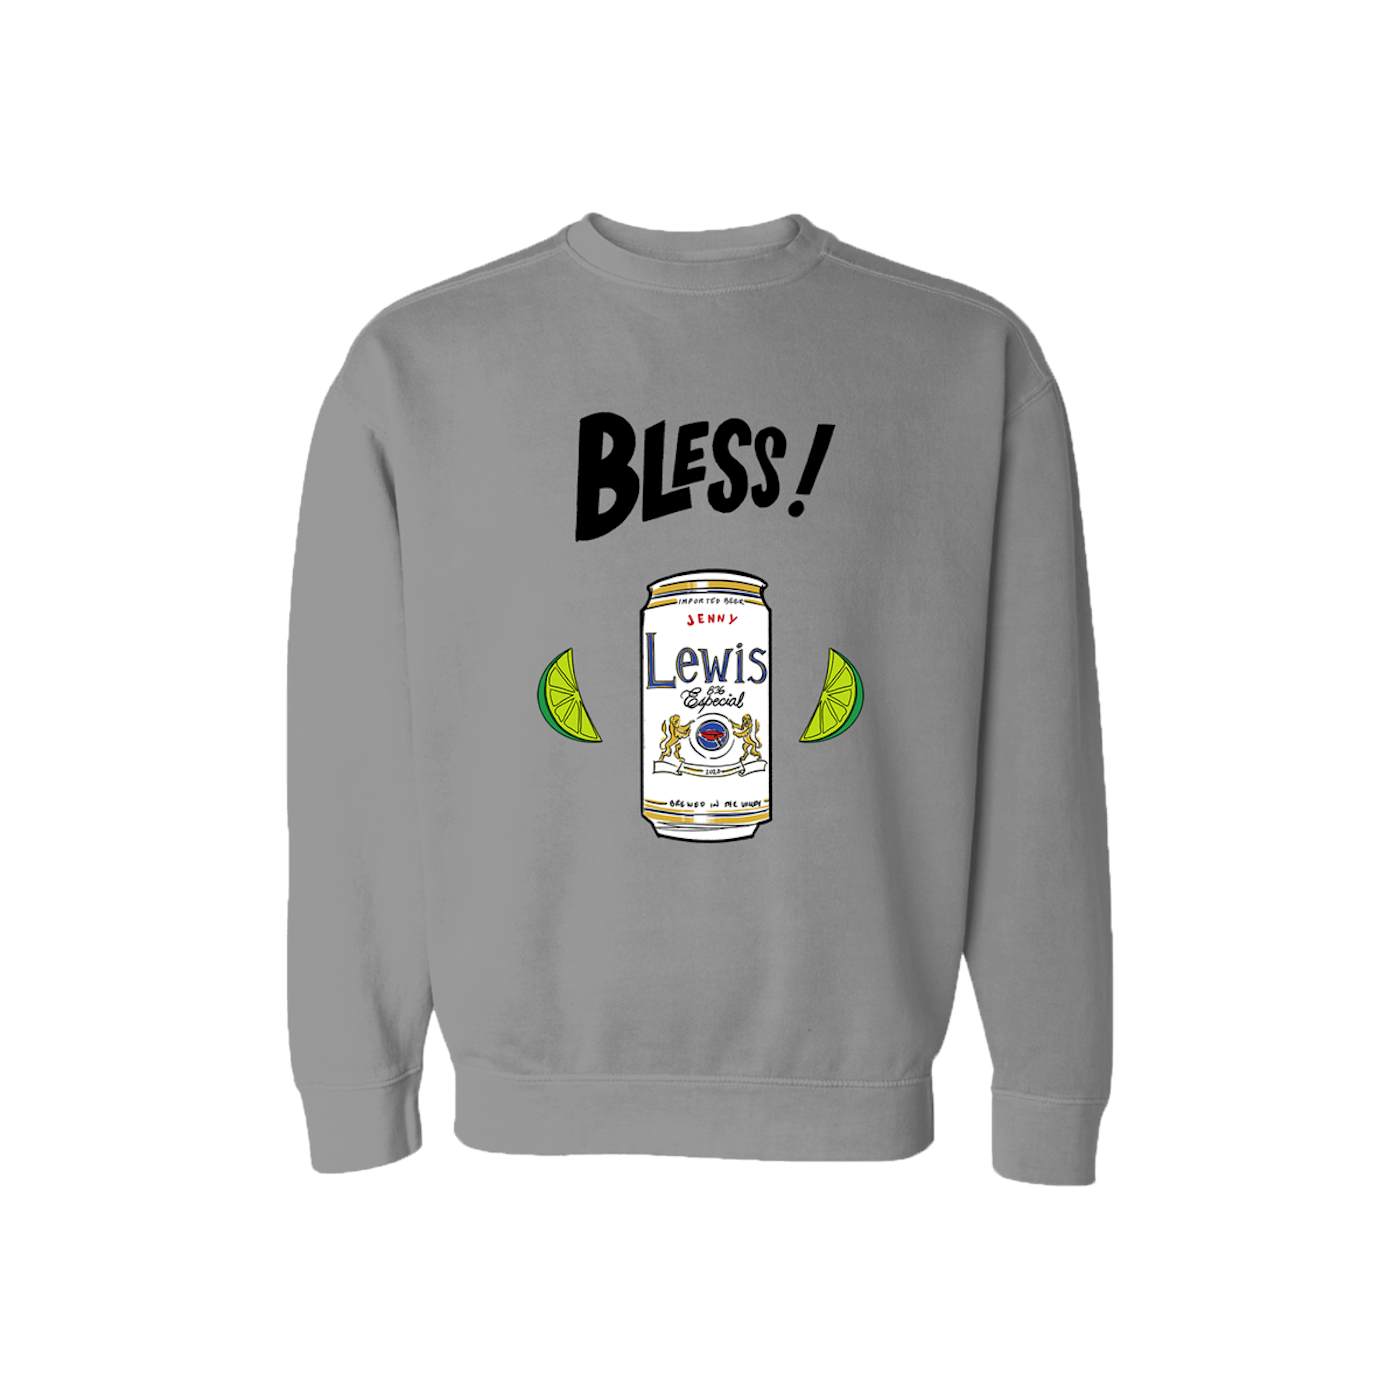 Jenny Lewis Bless! Crewneck Sweatshirt